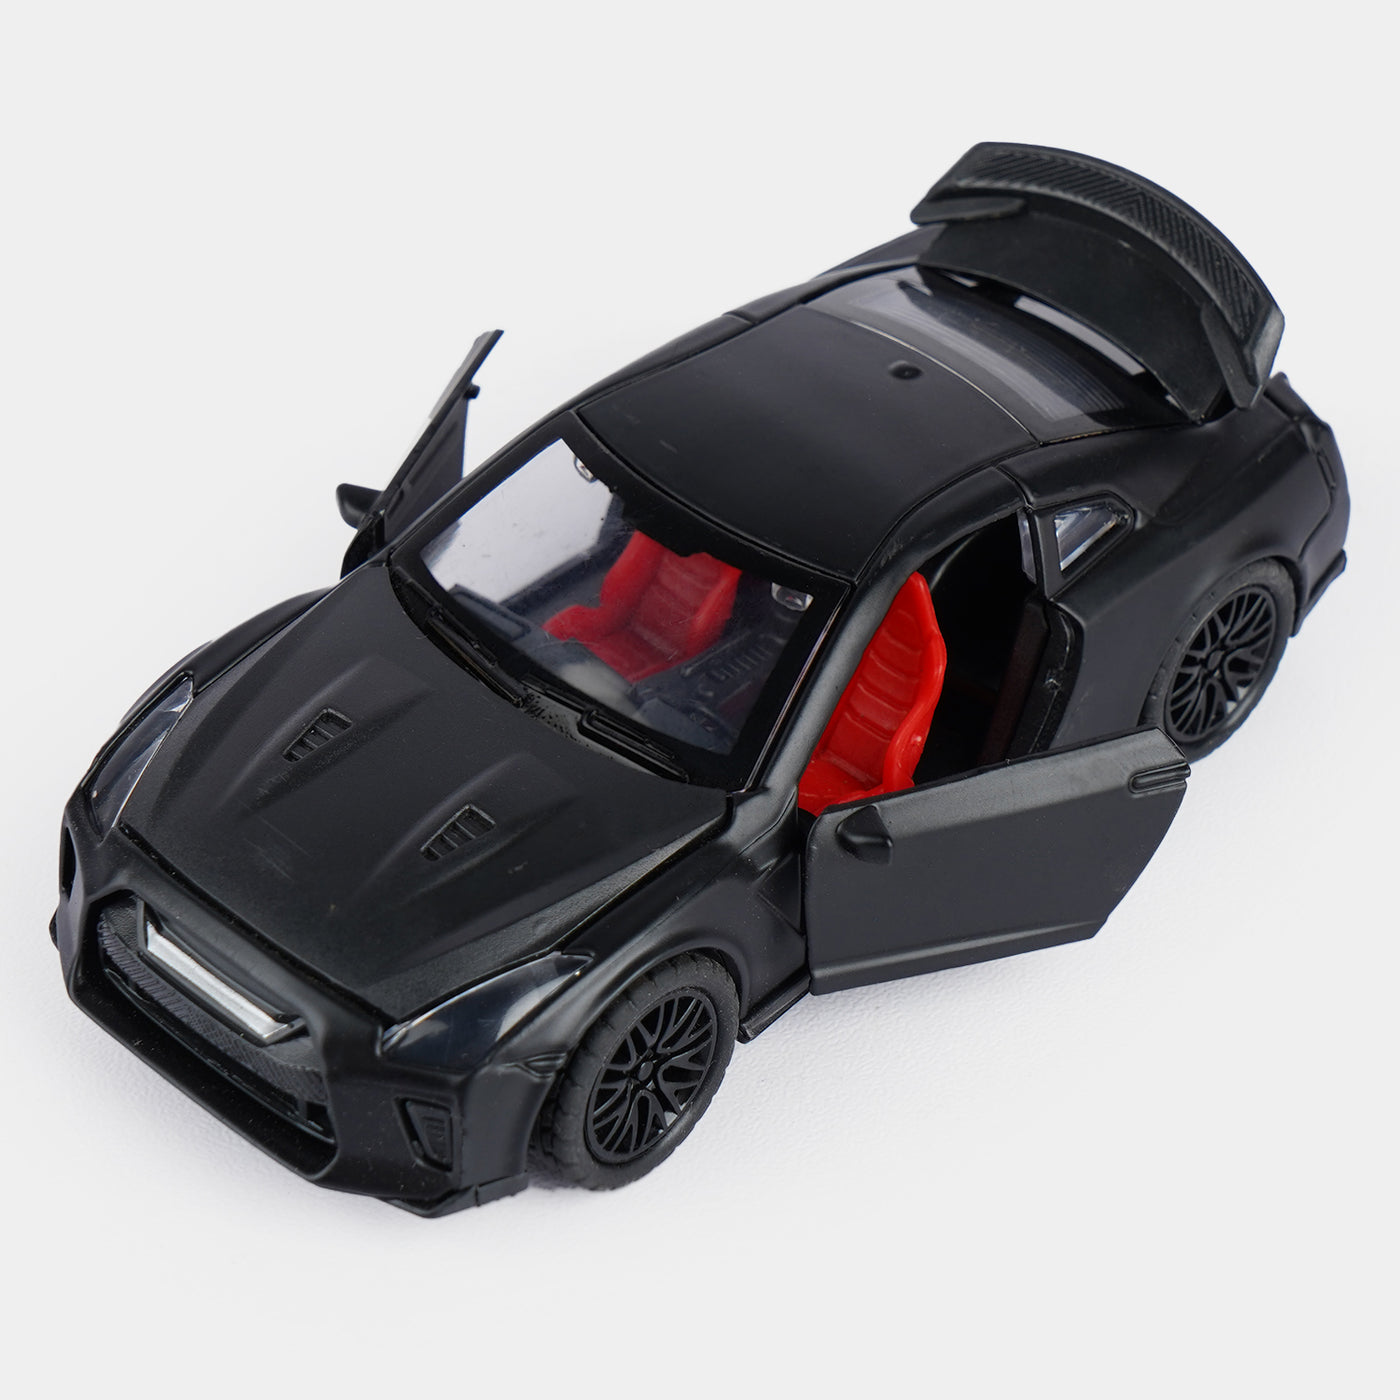 Die-Cast Model Car For Kids